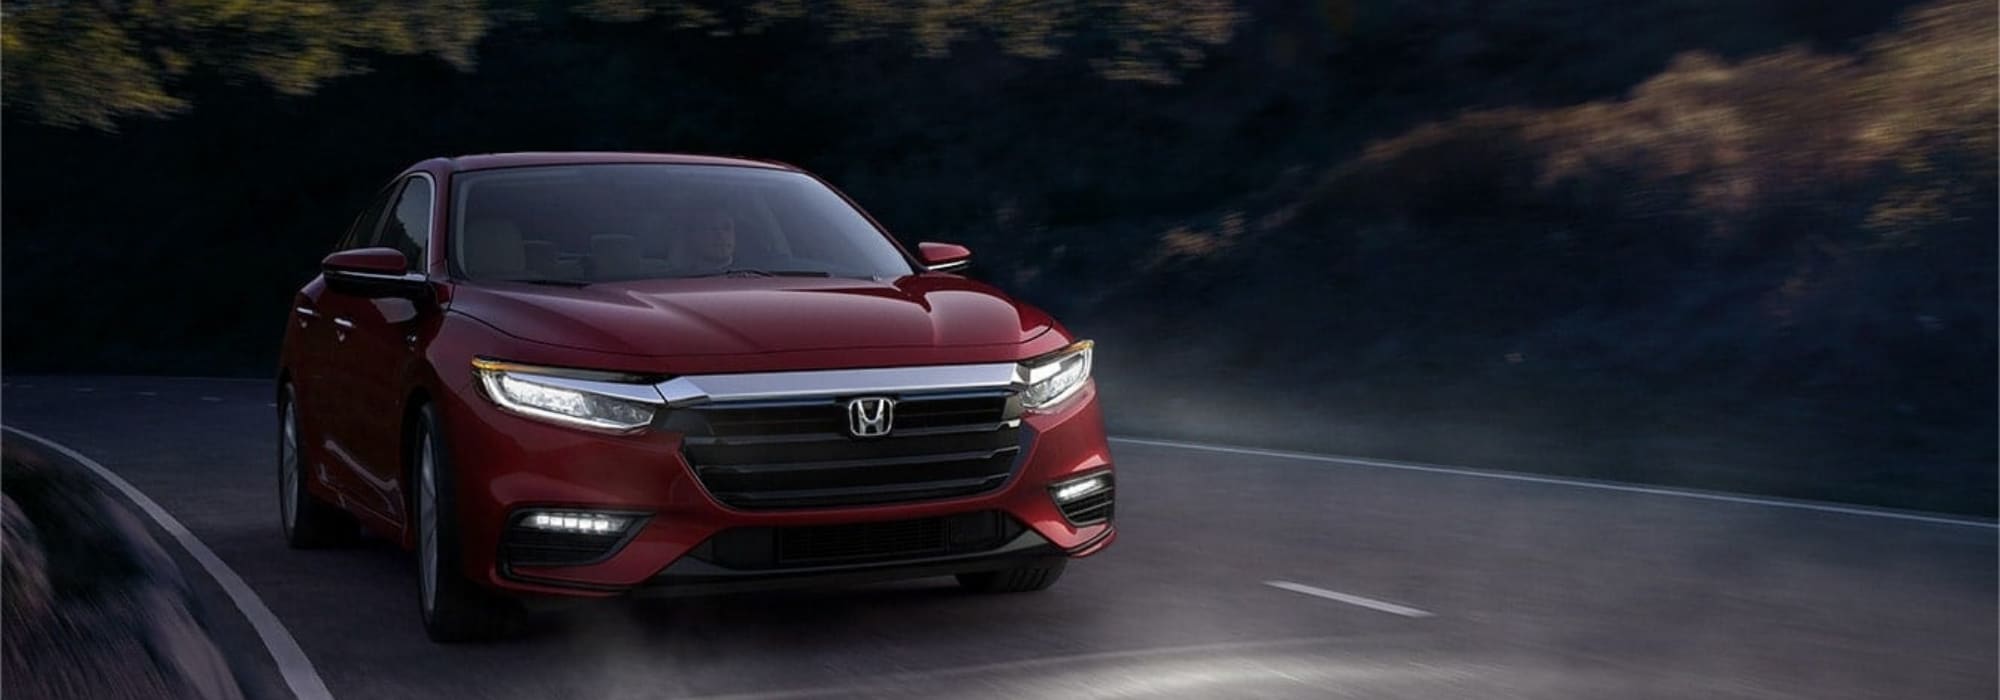 New 2021 Honda Insight Hybrid Sedan exterior hero image